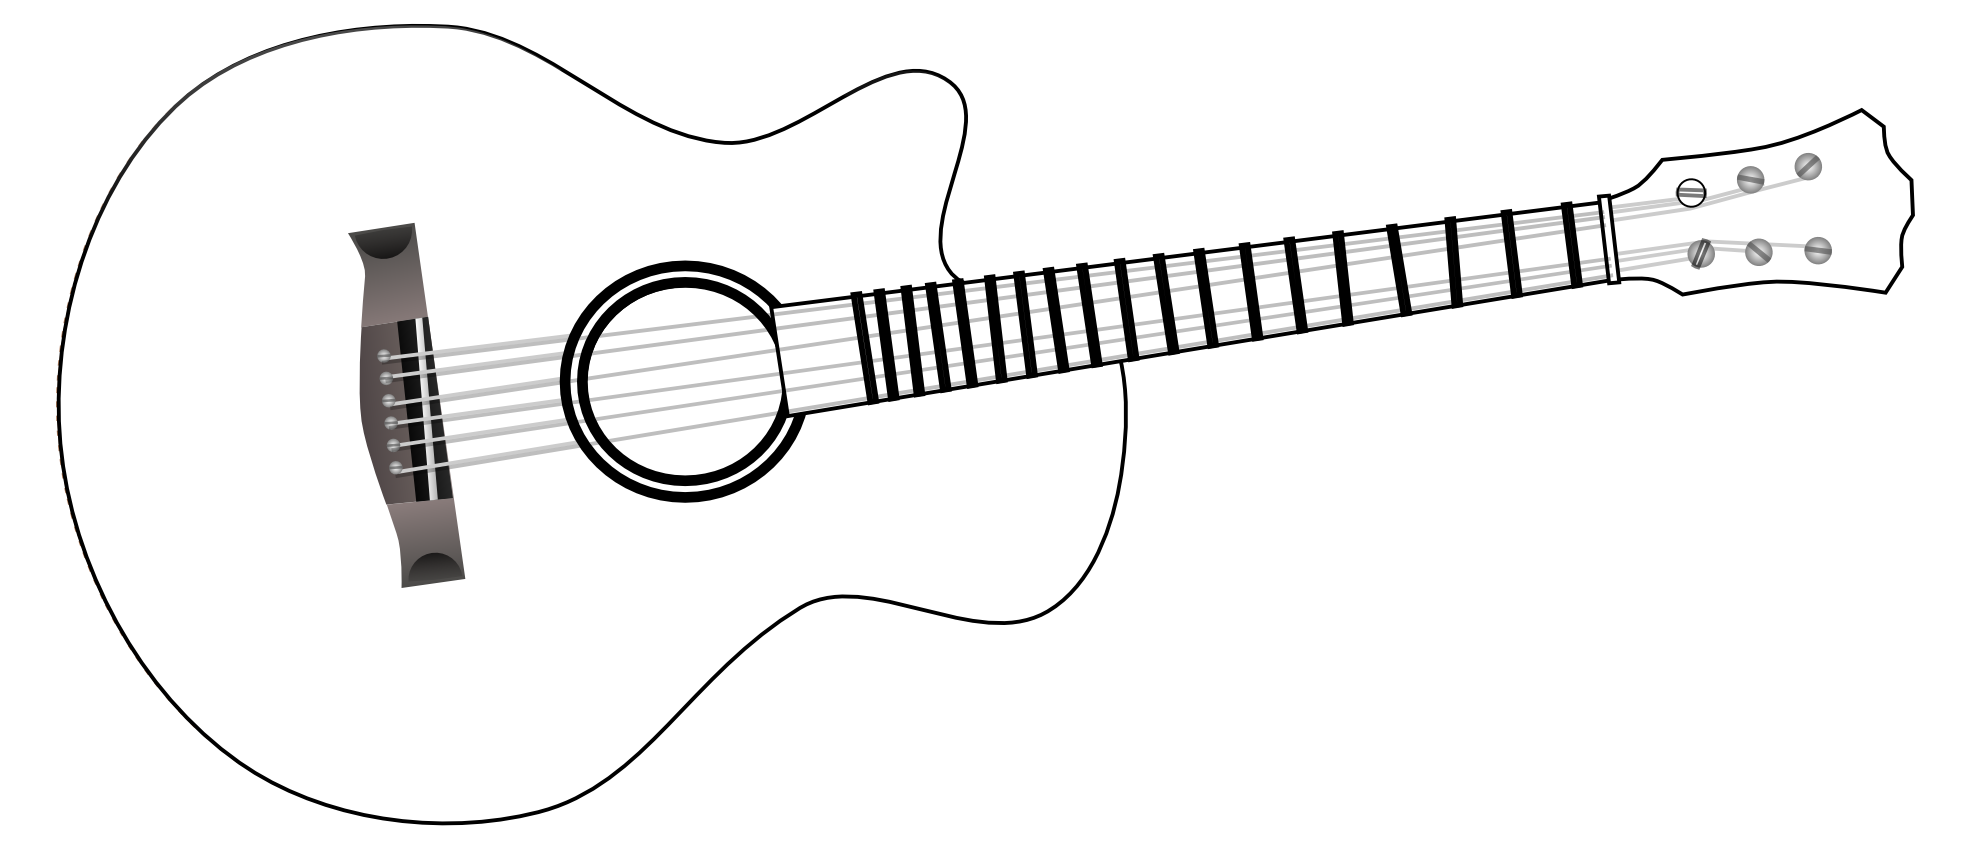 Guitar outline clip art black and white